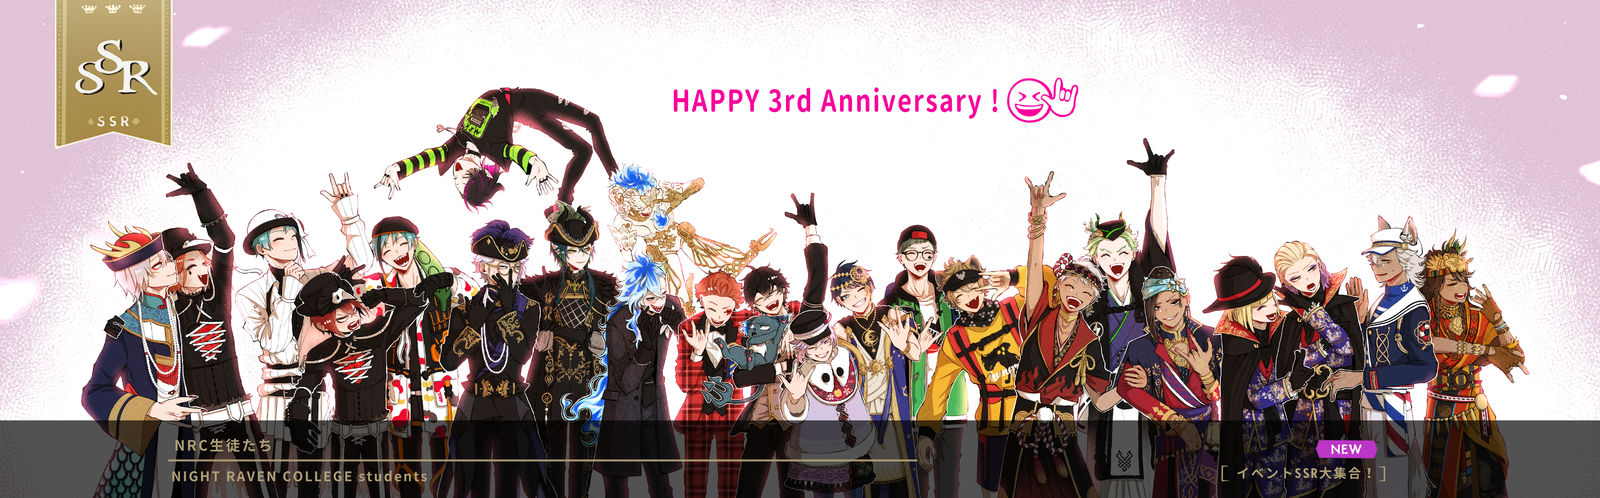 HAPPY 3rd Anniversary !!插画图片壁纸